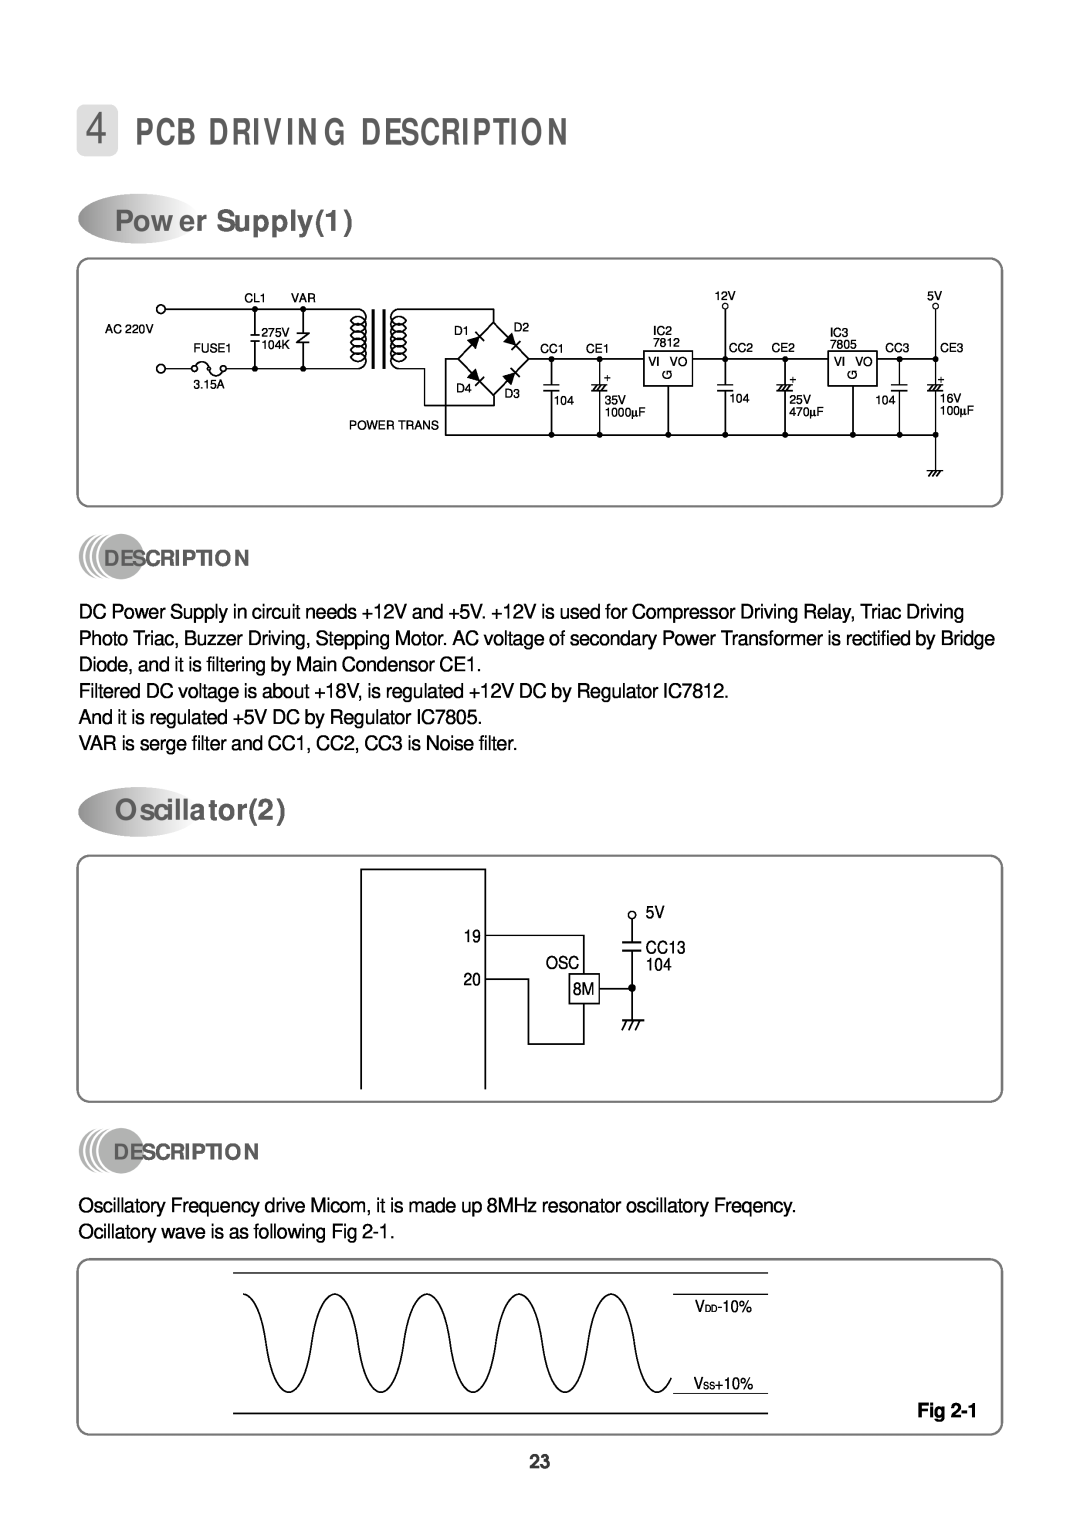 Daewoo DPB-280LH service manual 4PCB DRIVING DESCRIPTION, Power Supply1, Oscillator2, Description 